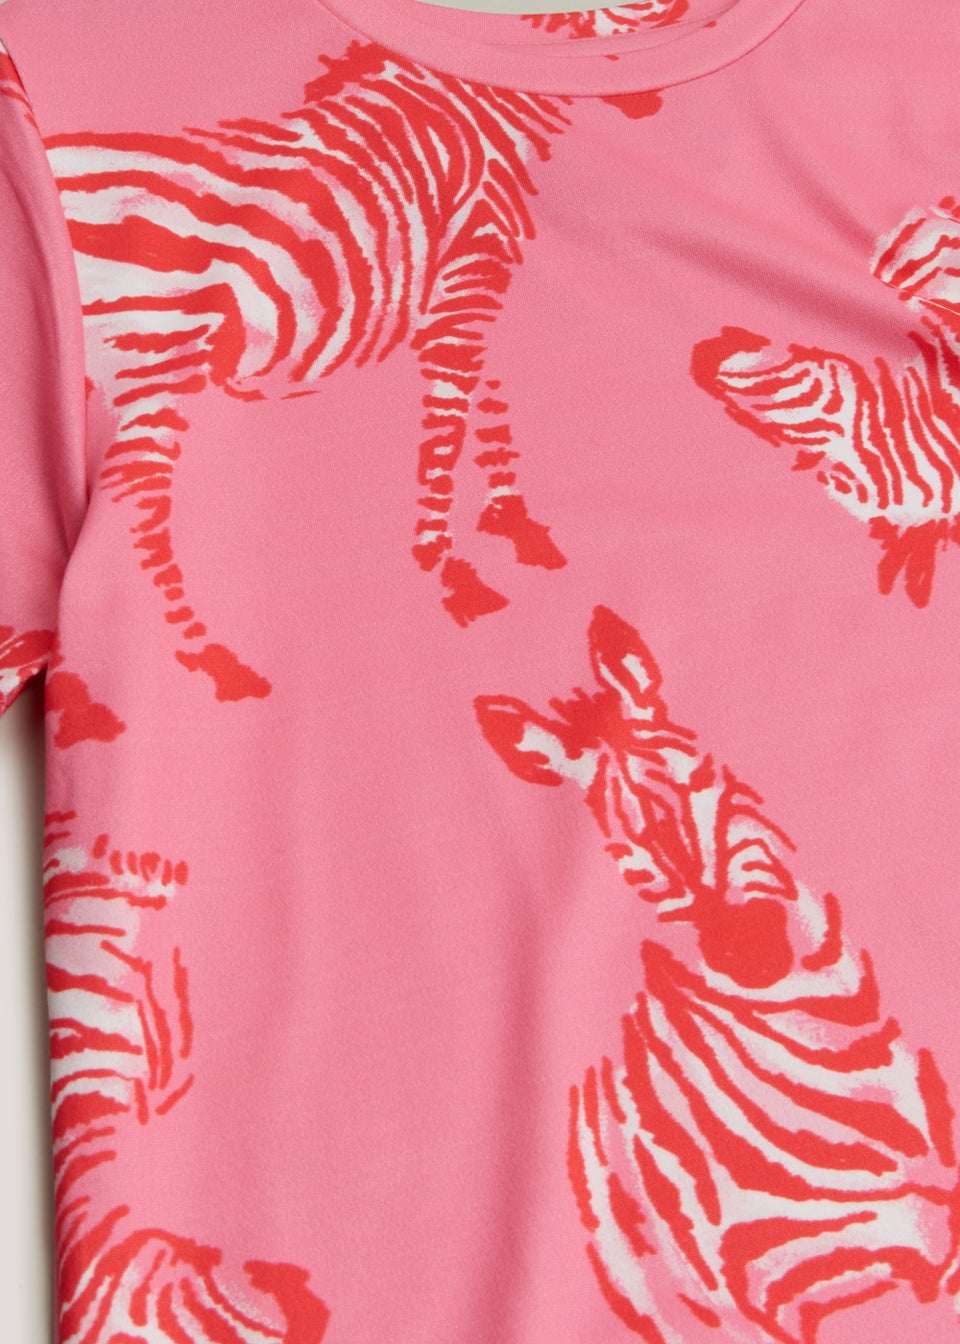 Girls Pink Zebra Long Pyjama Set (5-13yrs)